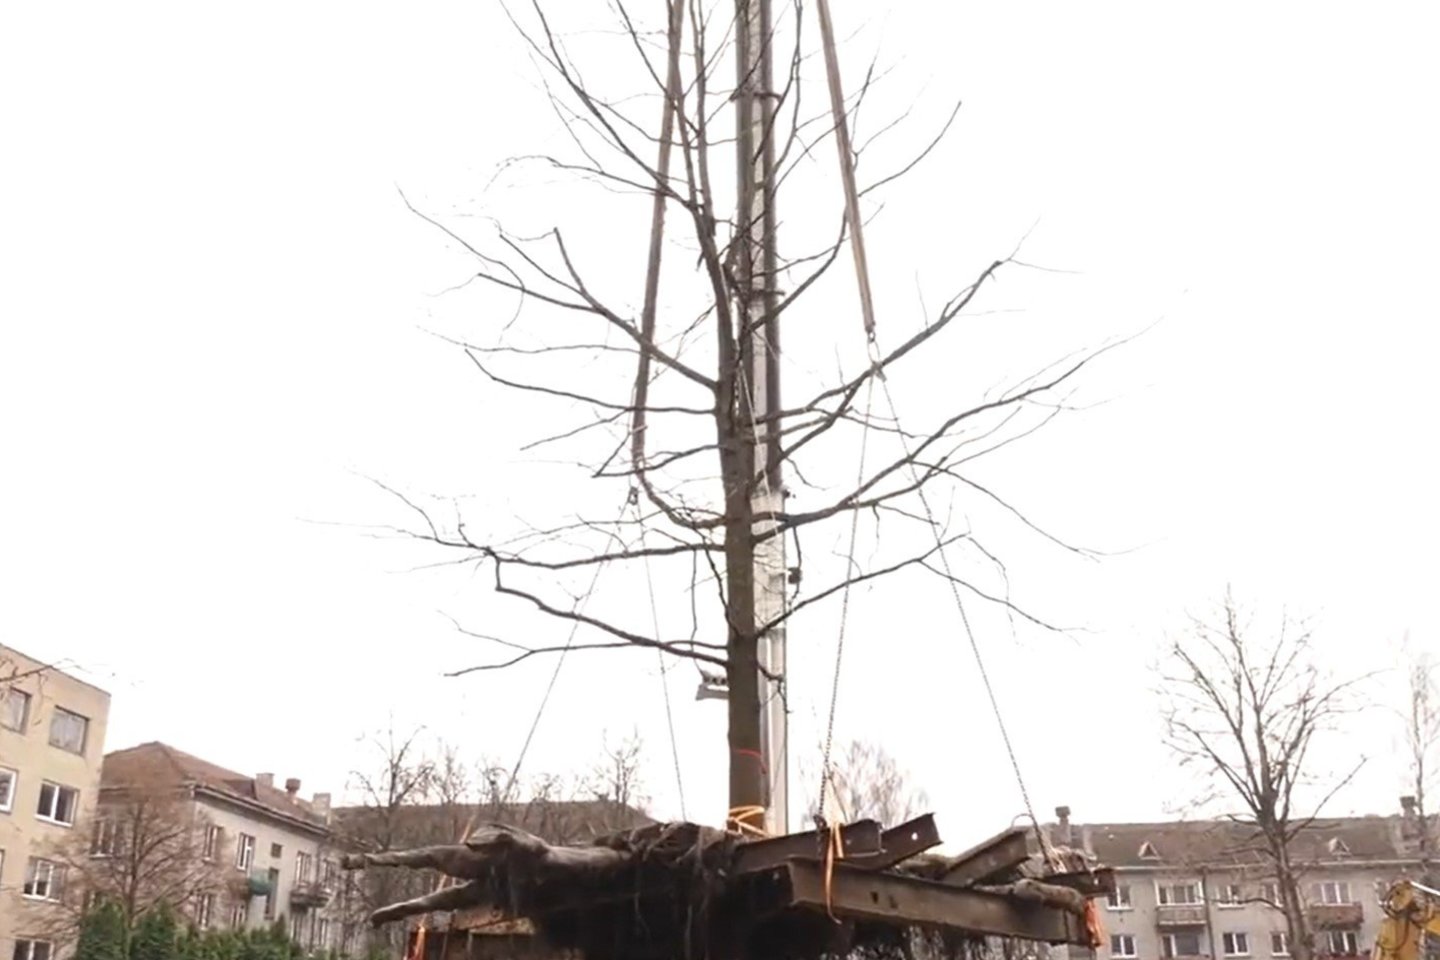  Lietuvoje pirmąkart persodintas brandus 40 cm skersmens medis.<br>Stopkadras